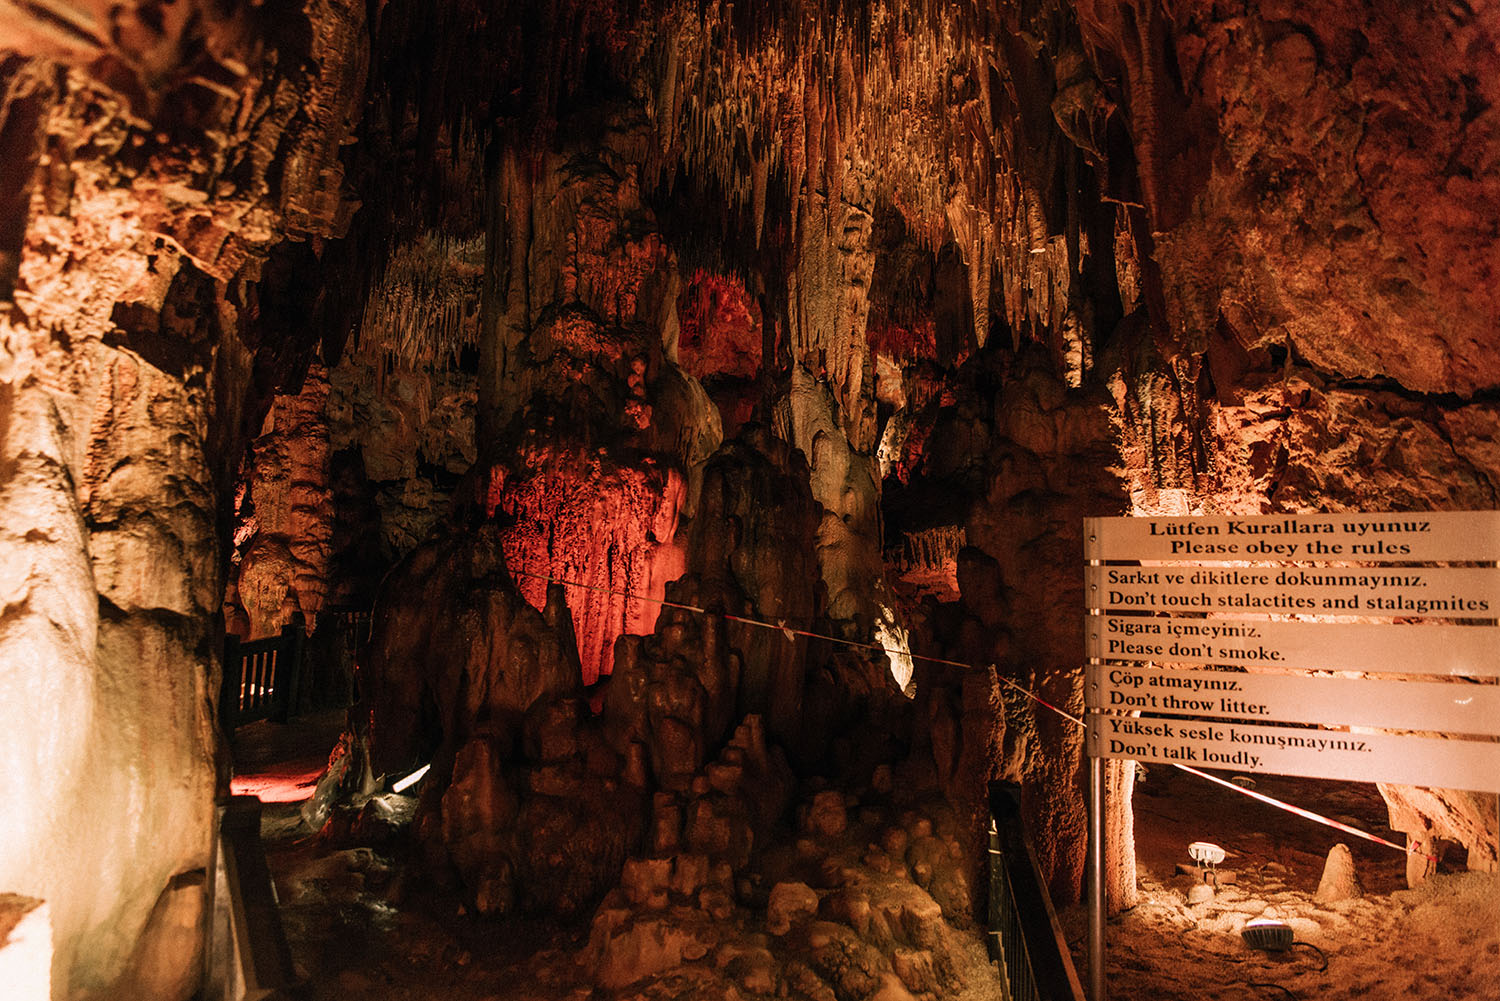 Damlataş Cave in Alanya, Turkey